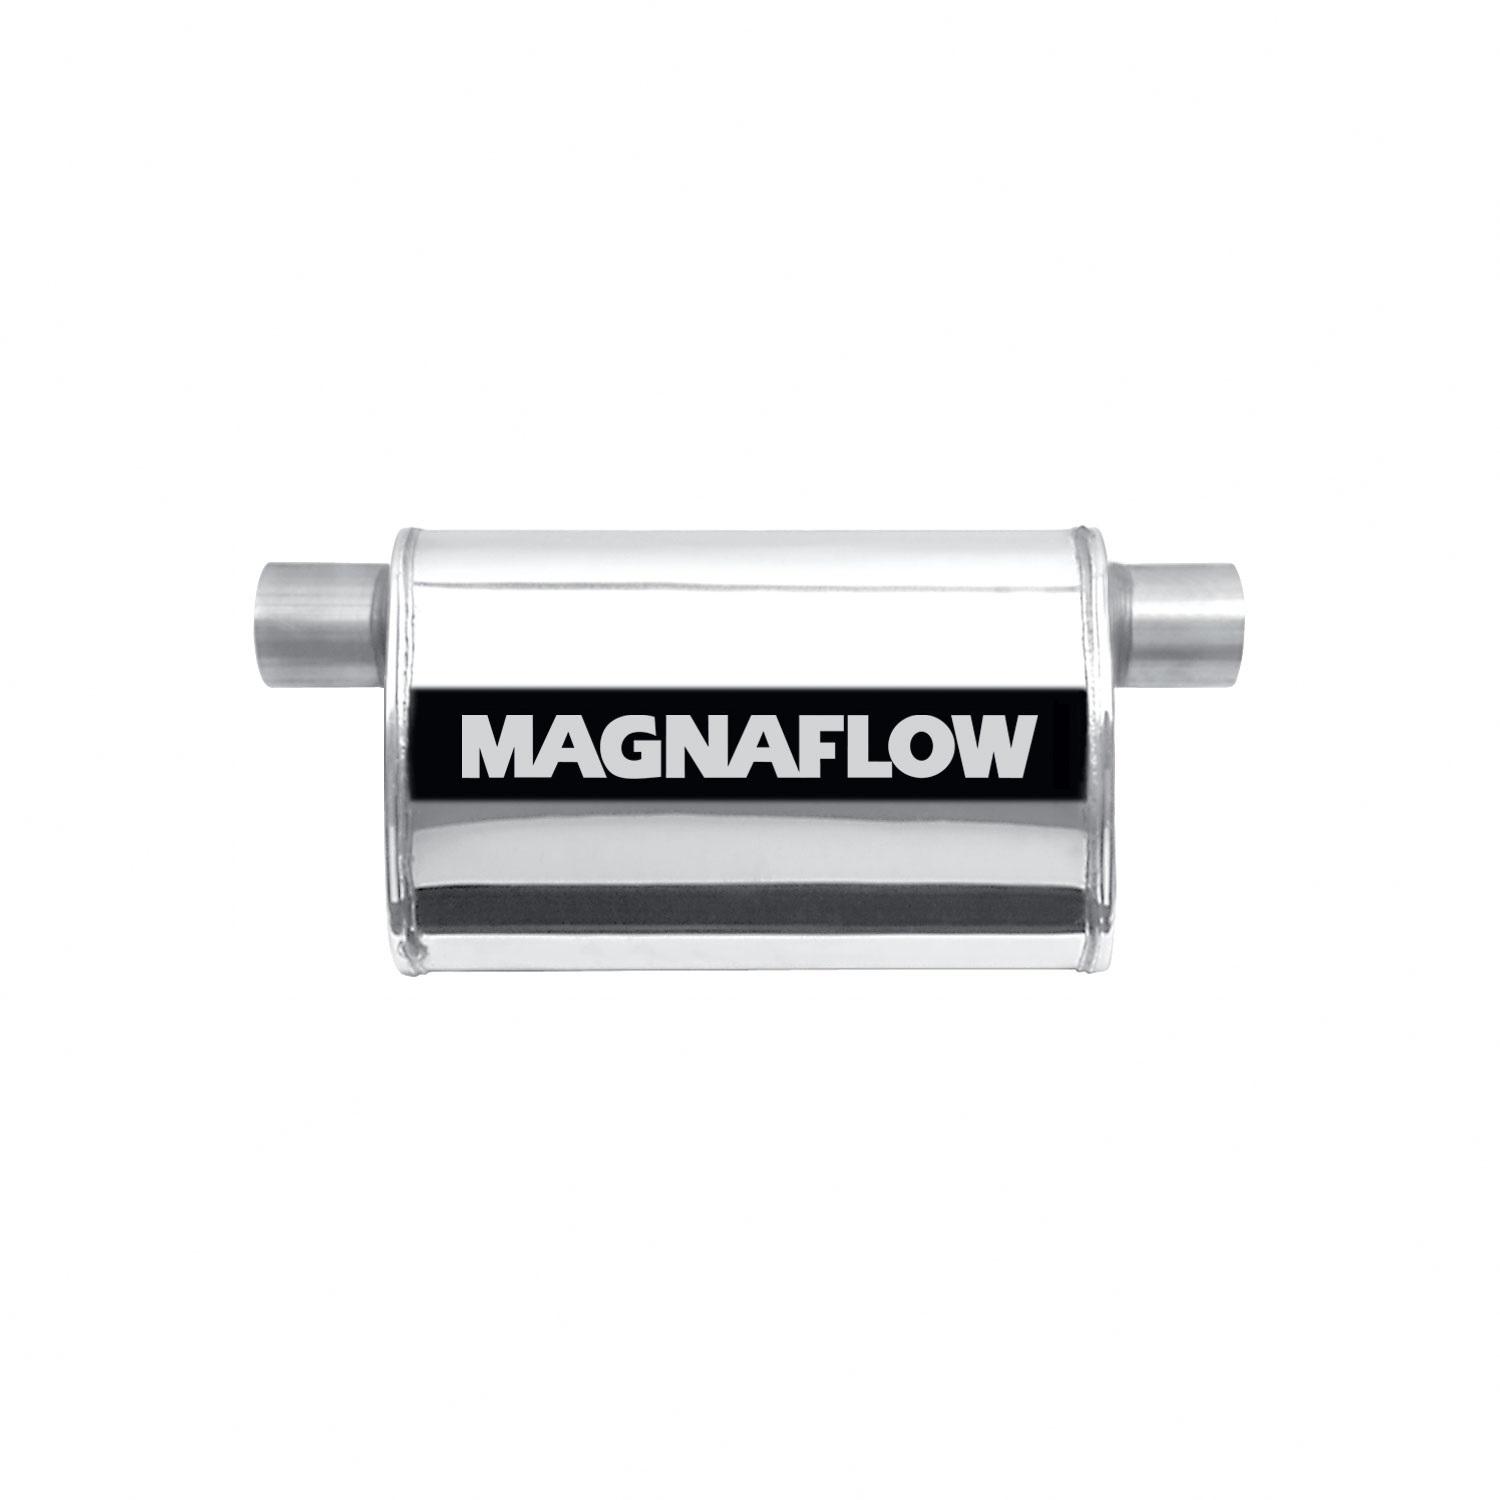 Magnaflow performance exhaust 14376 stainless steel muffler